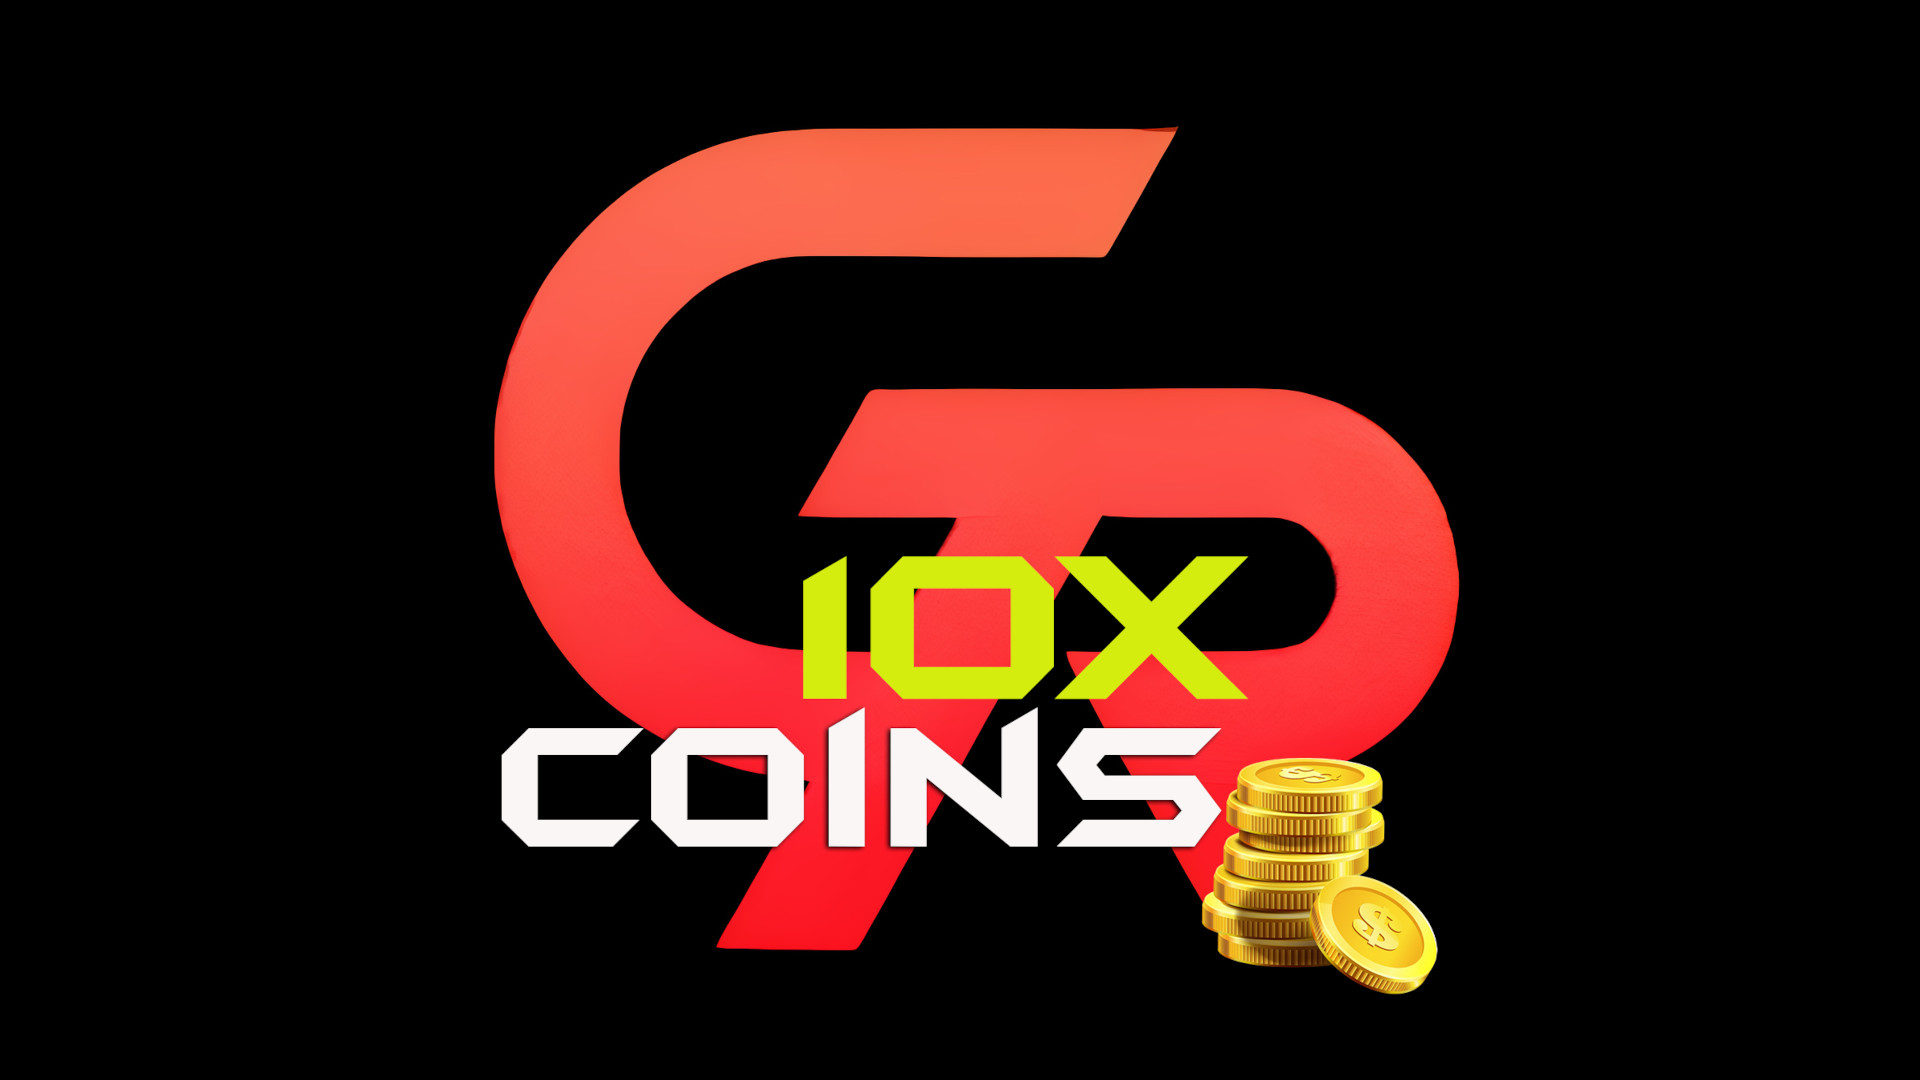 10x Glory Coins